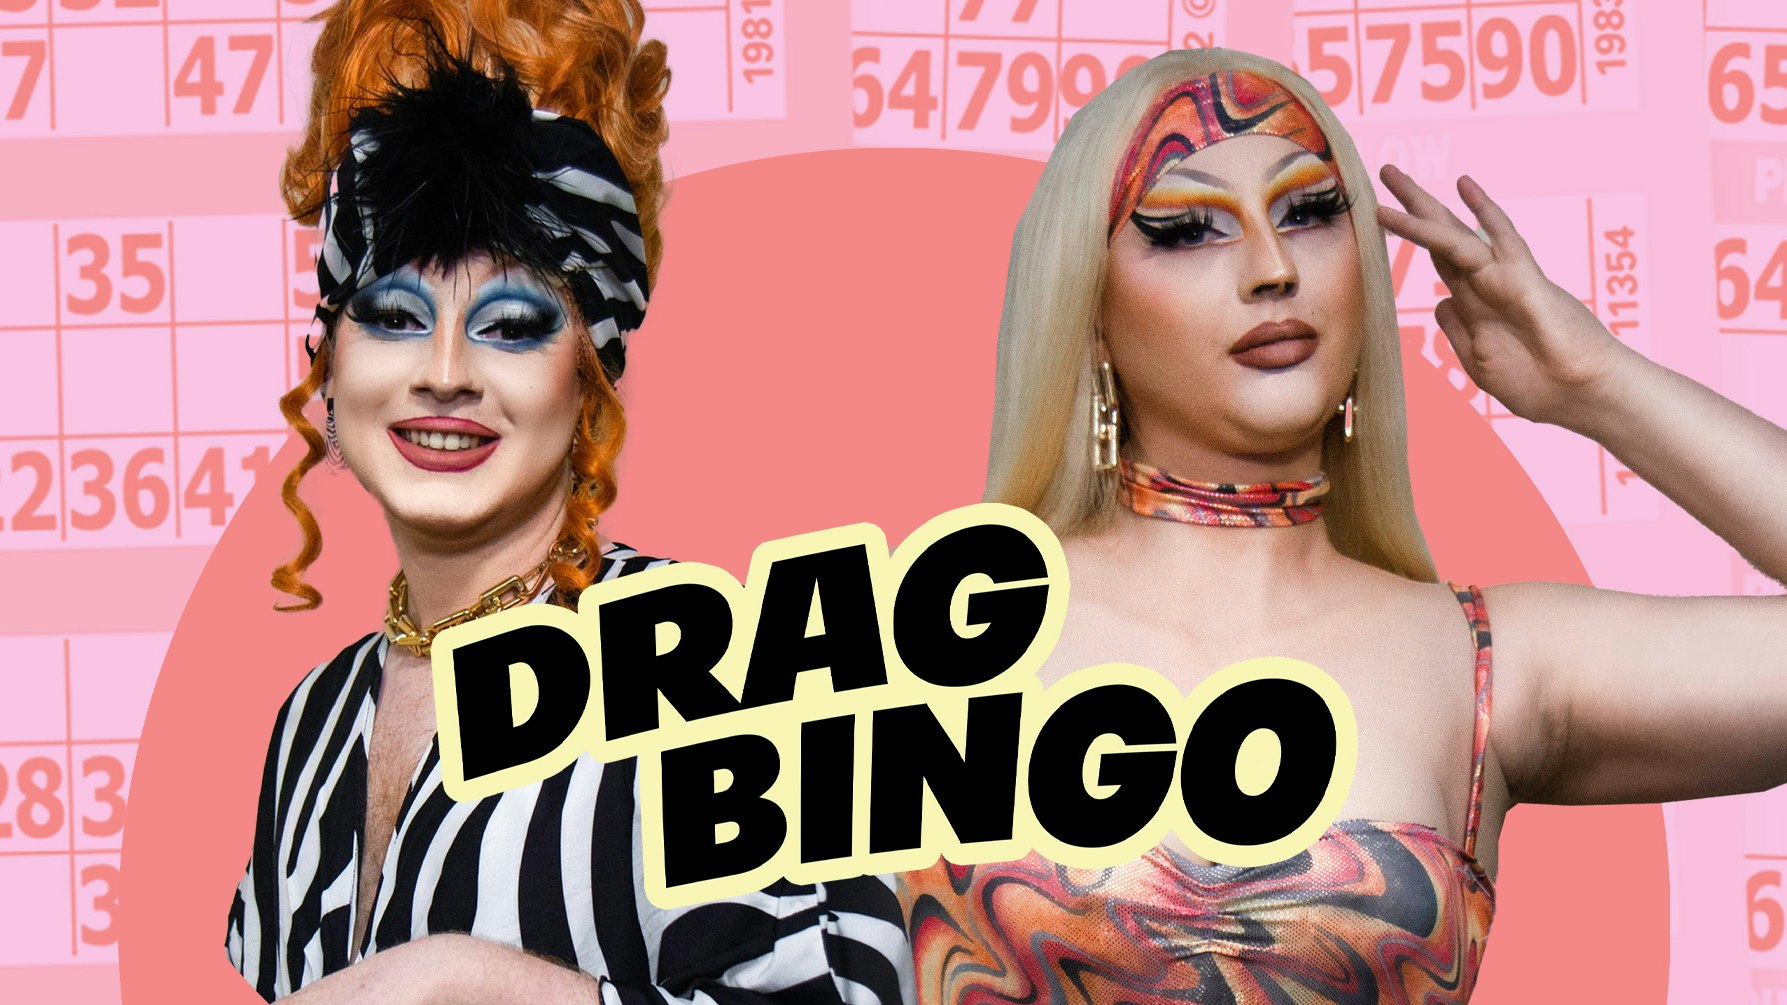 Drag Bingo with Cynthia and Spank | Moles Pride Week